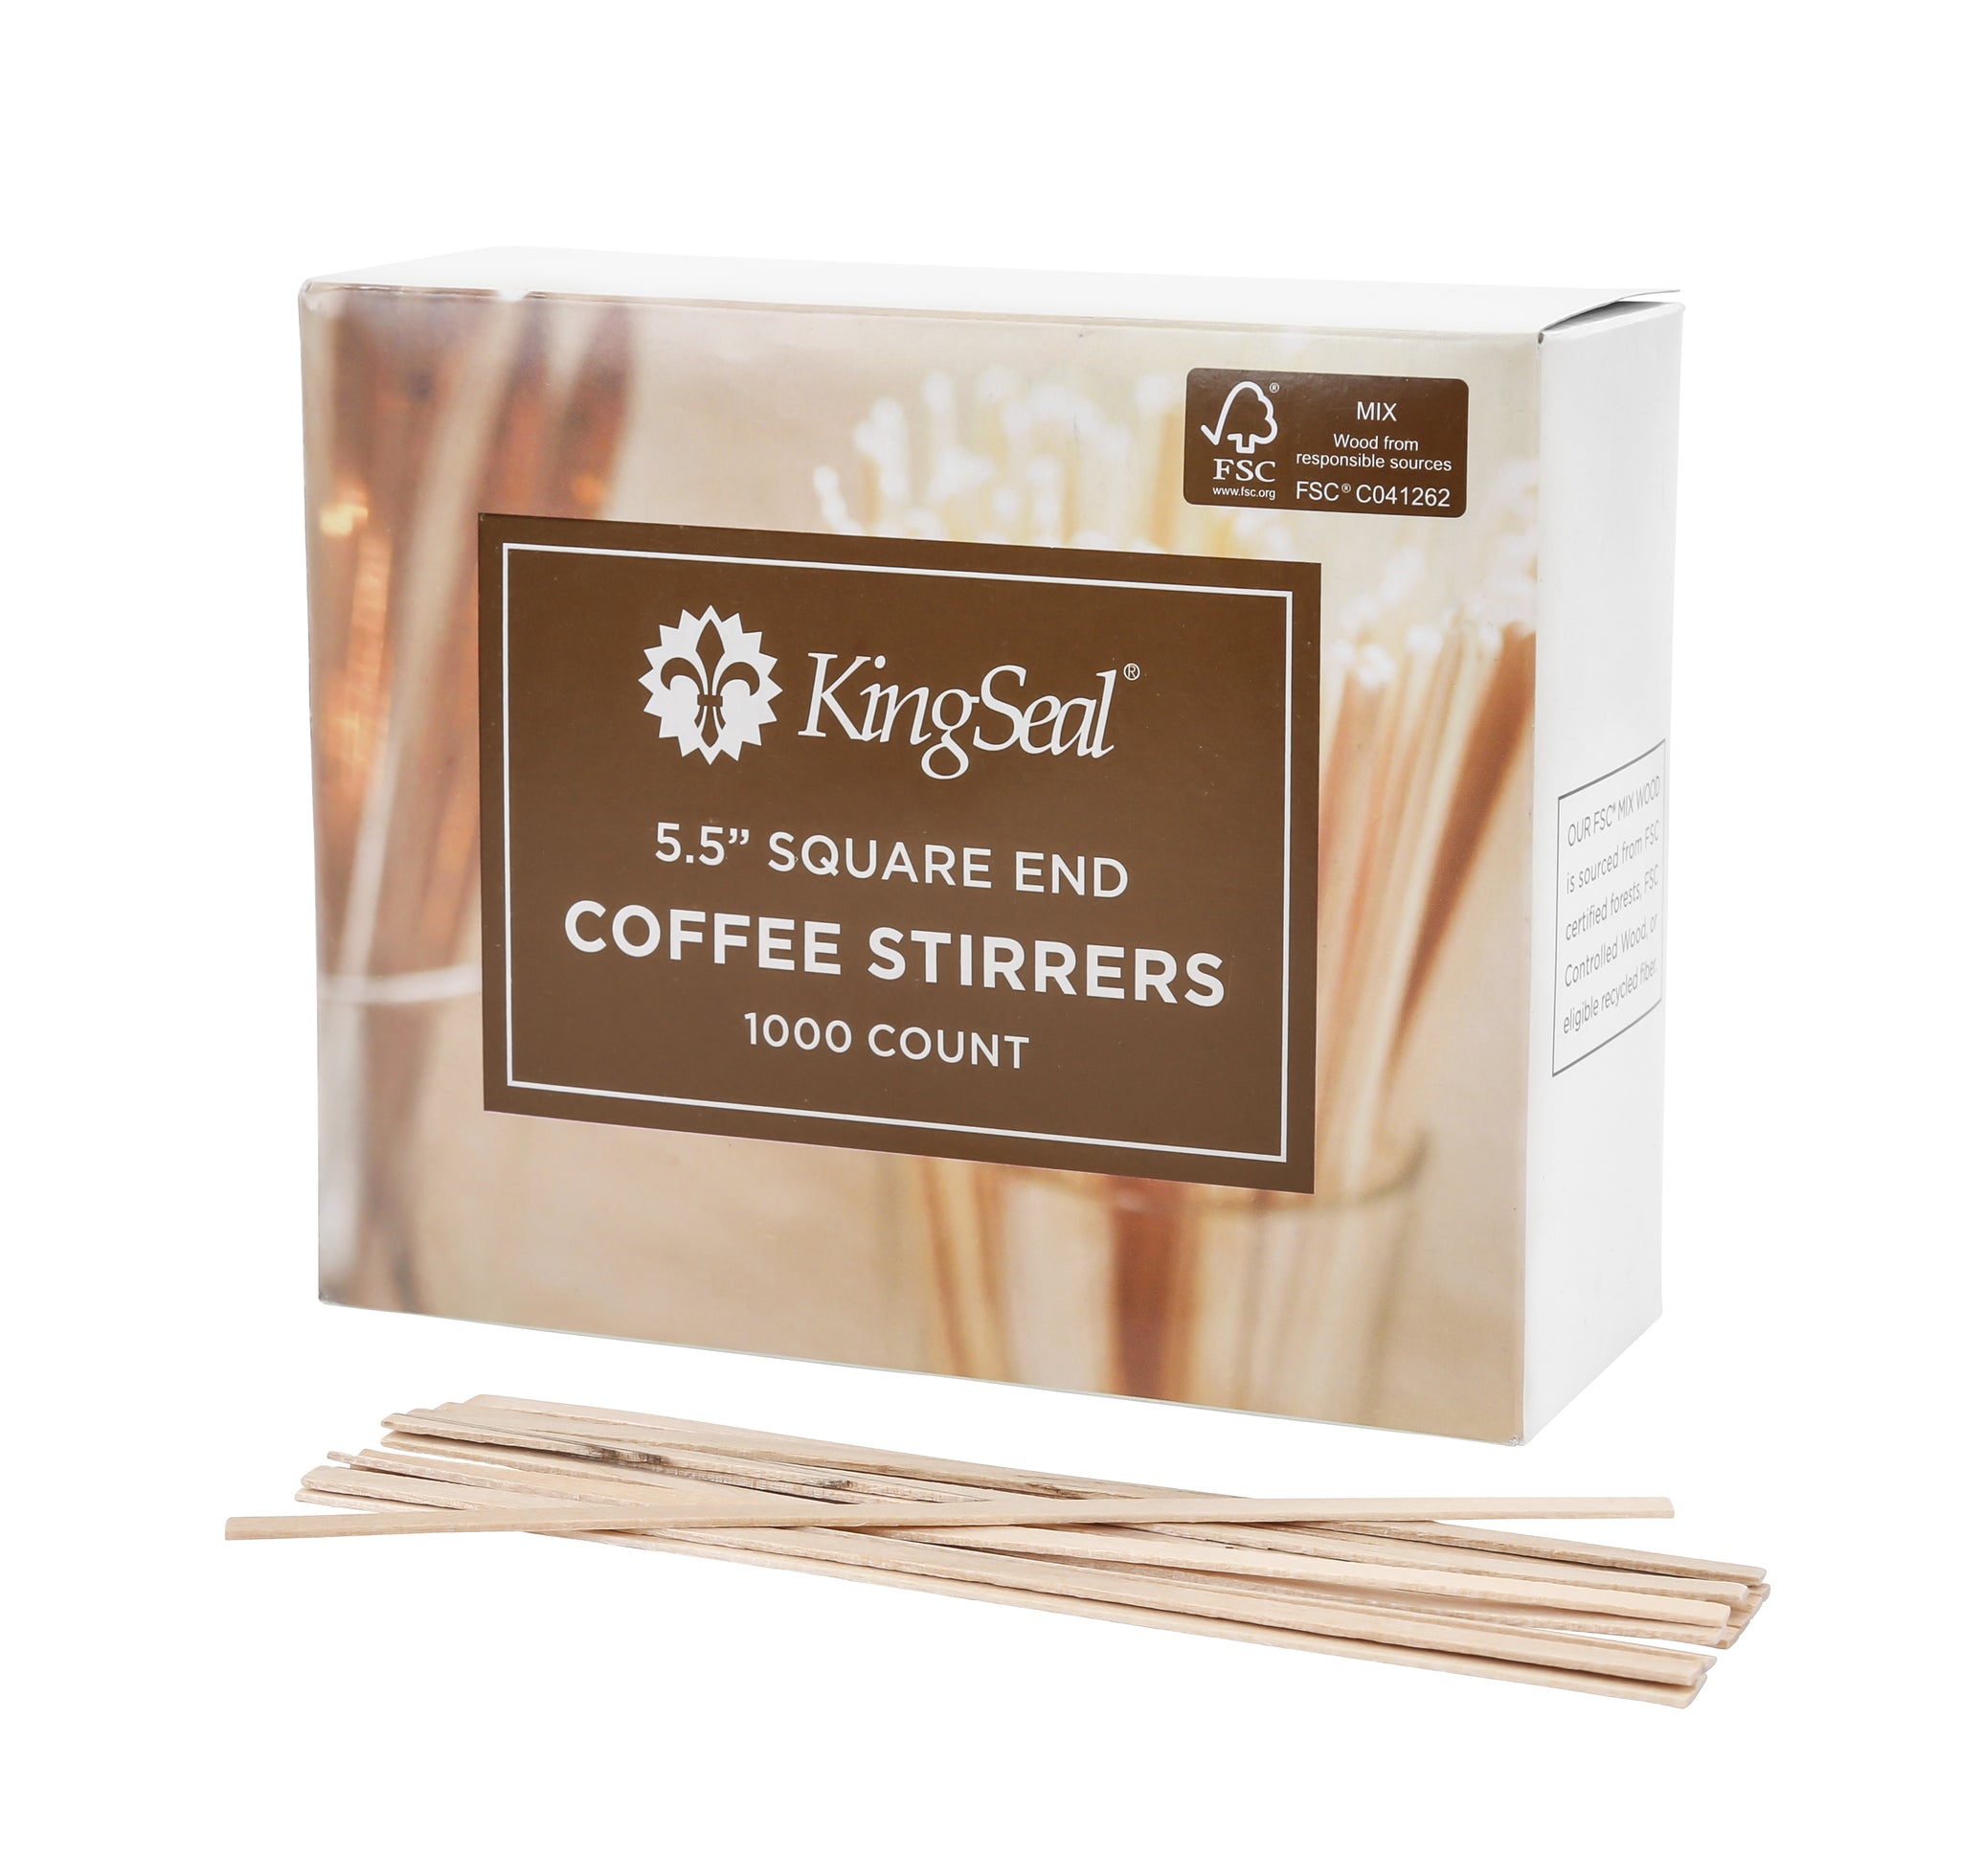 Solo Birch Wood Stirrers coffee stir sticks C-10C, 7-Inch (1000 Count)